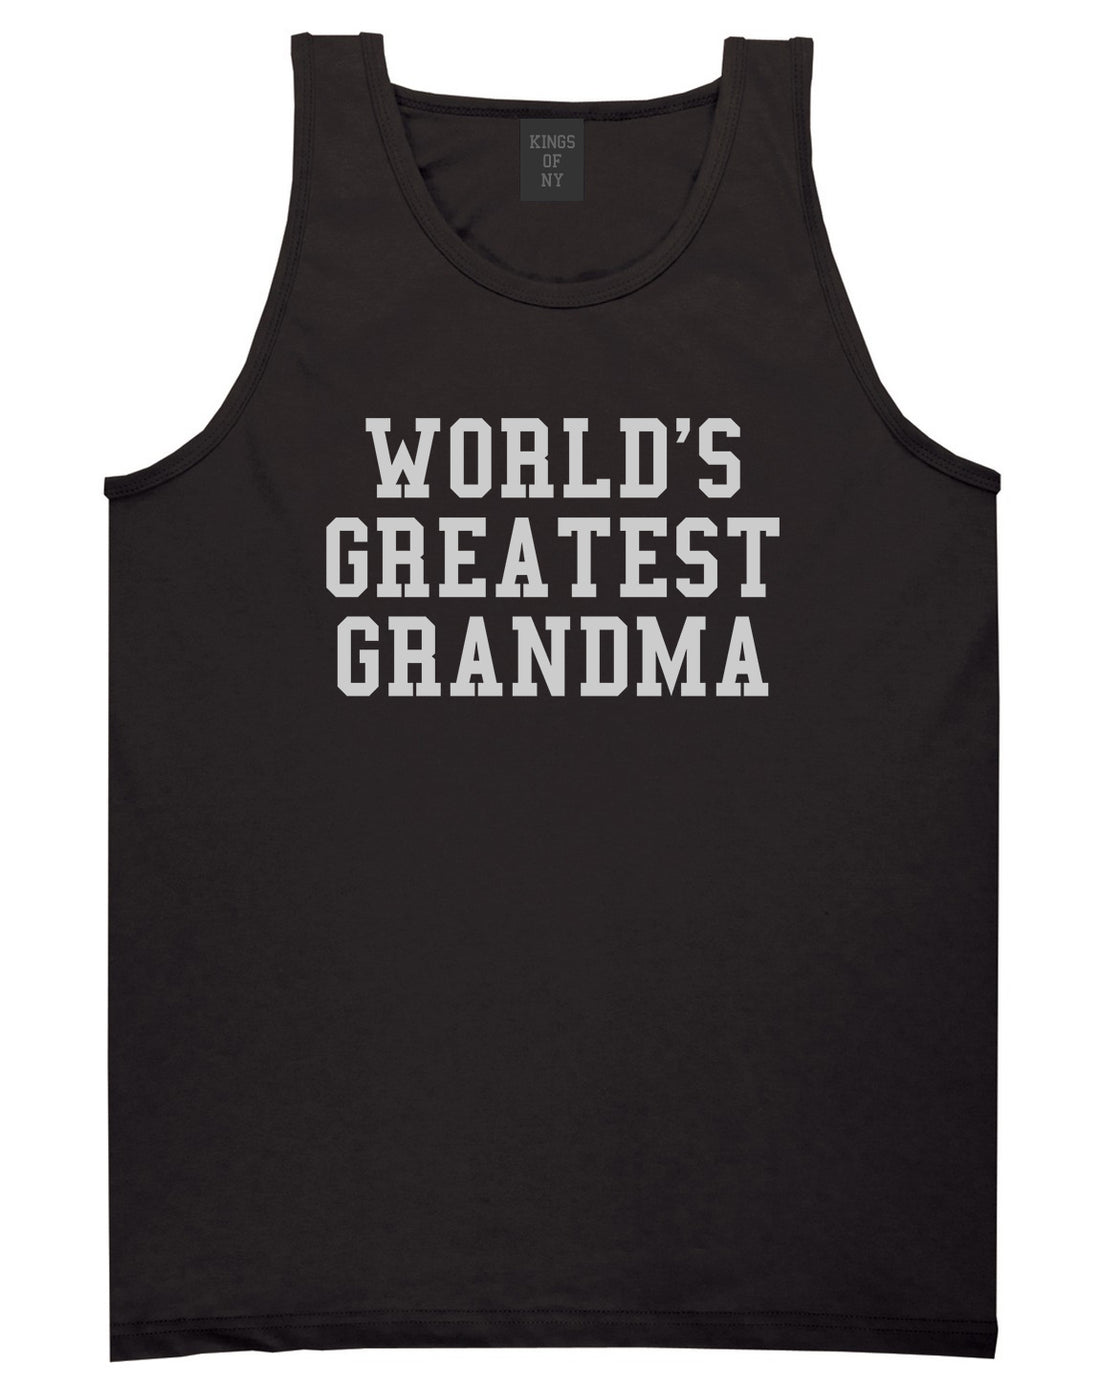 Worlds Greatest Grandma Birthday Gift Mens Tank Top T-Shirt Black